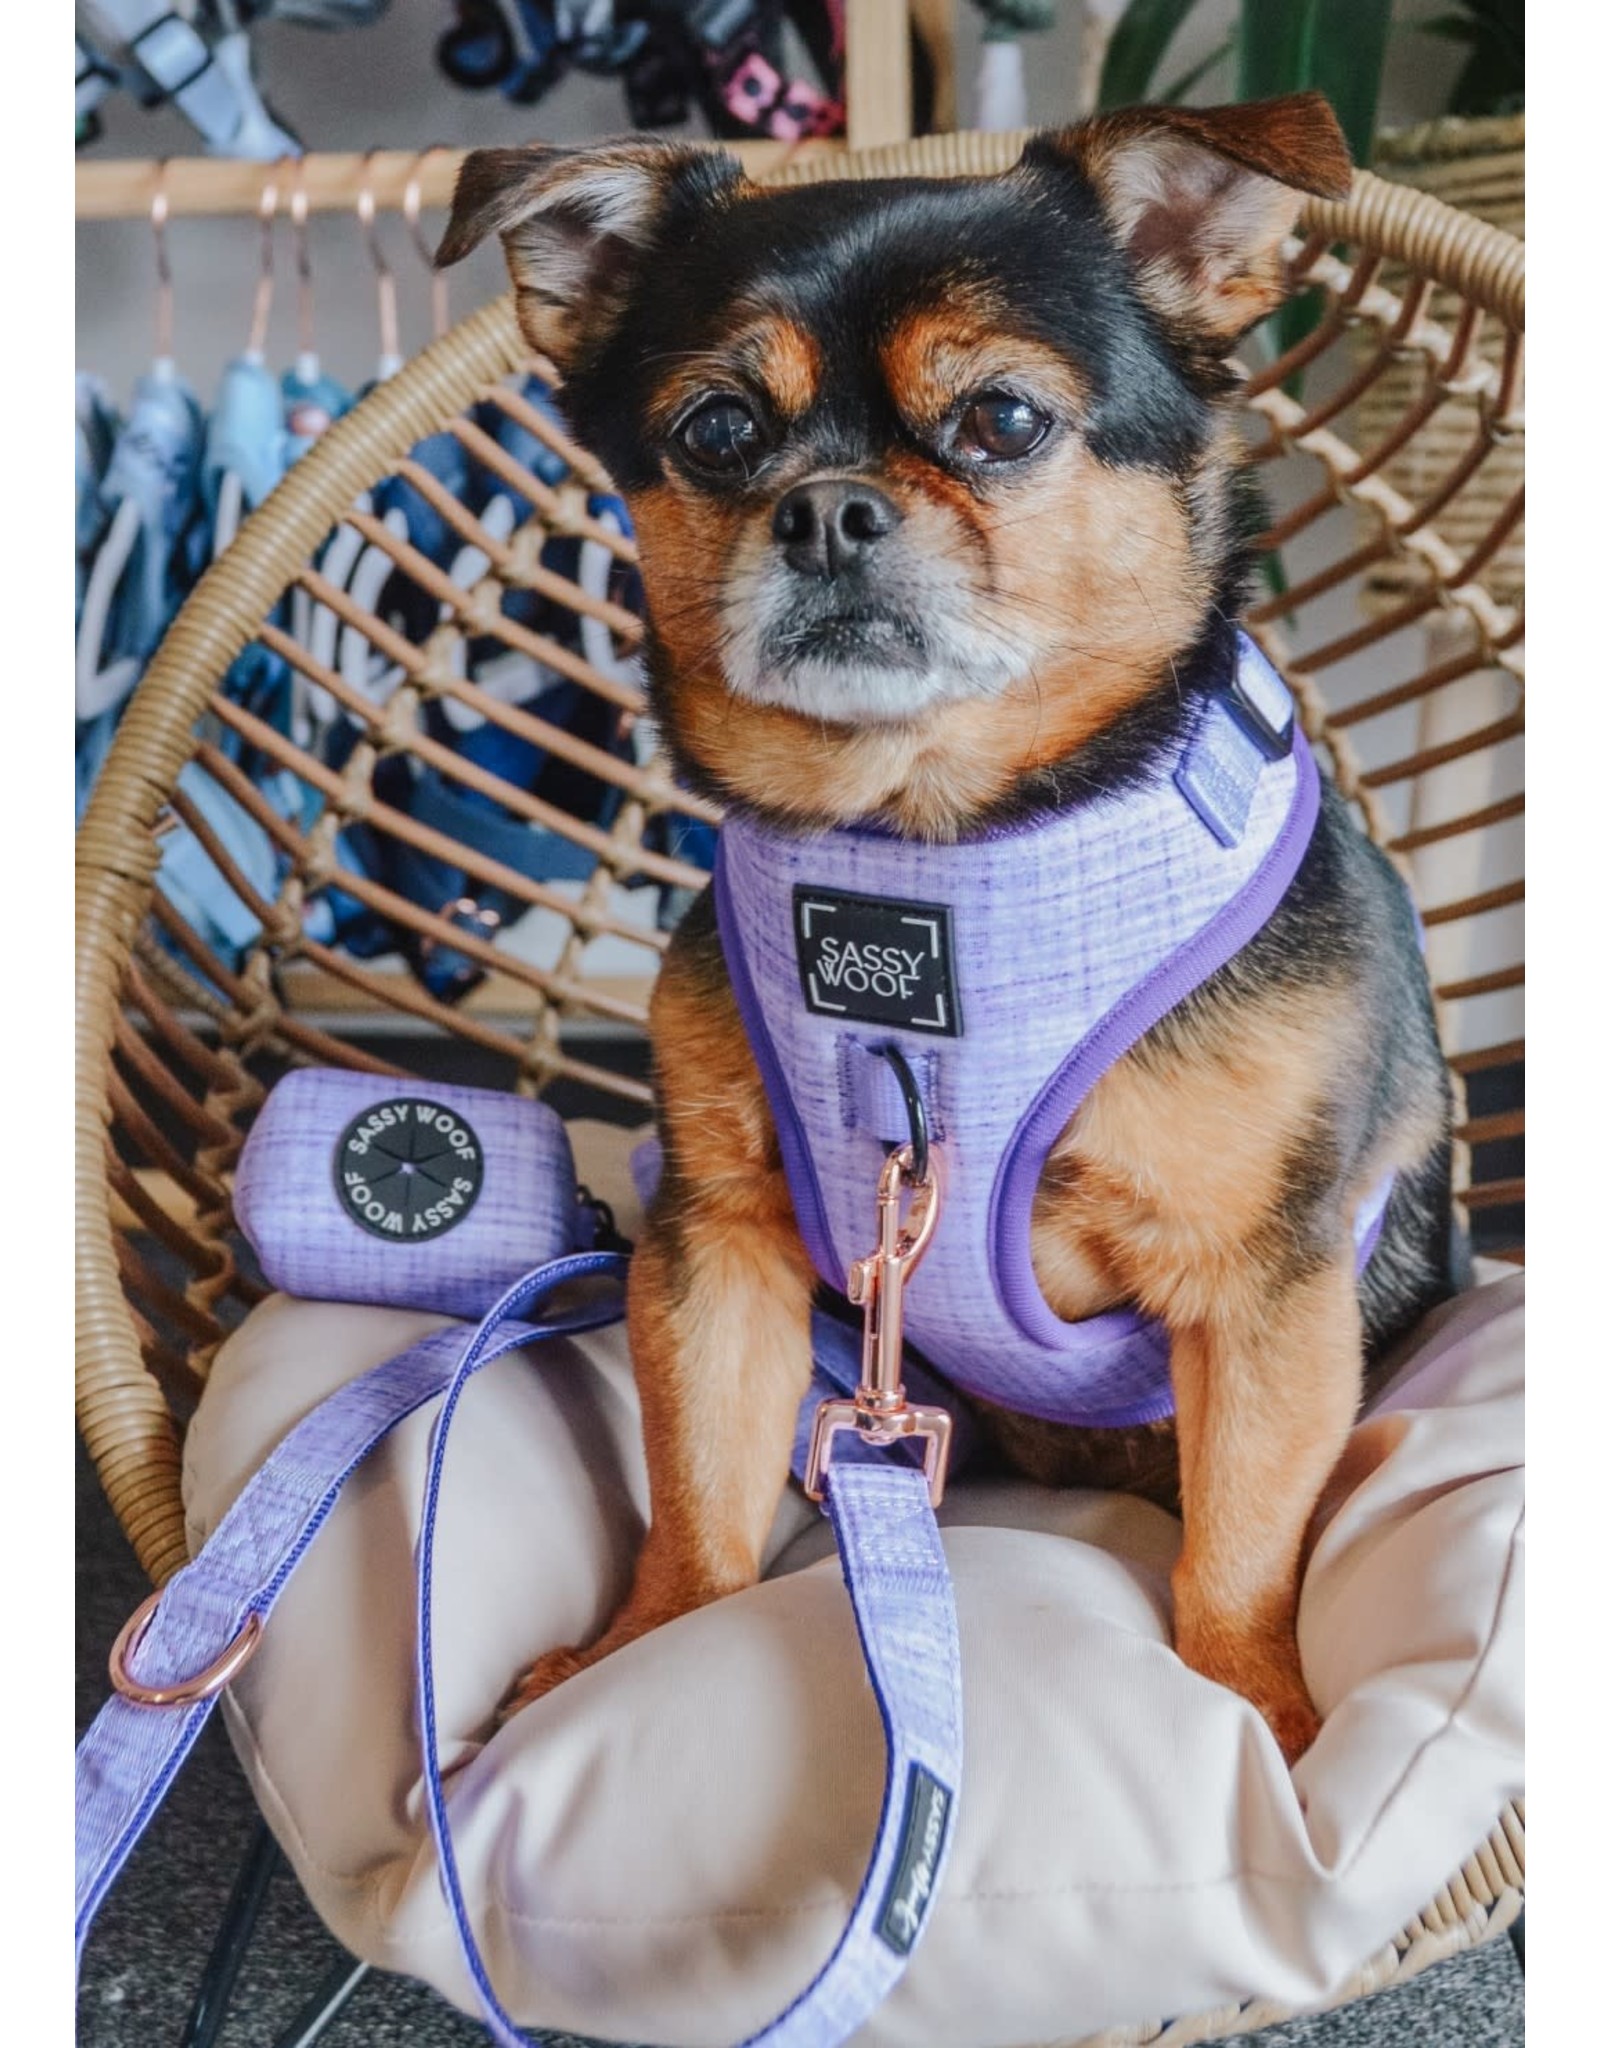 Sassy Woof 'Aurora' Dog Fabric Leash